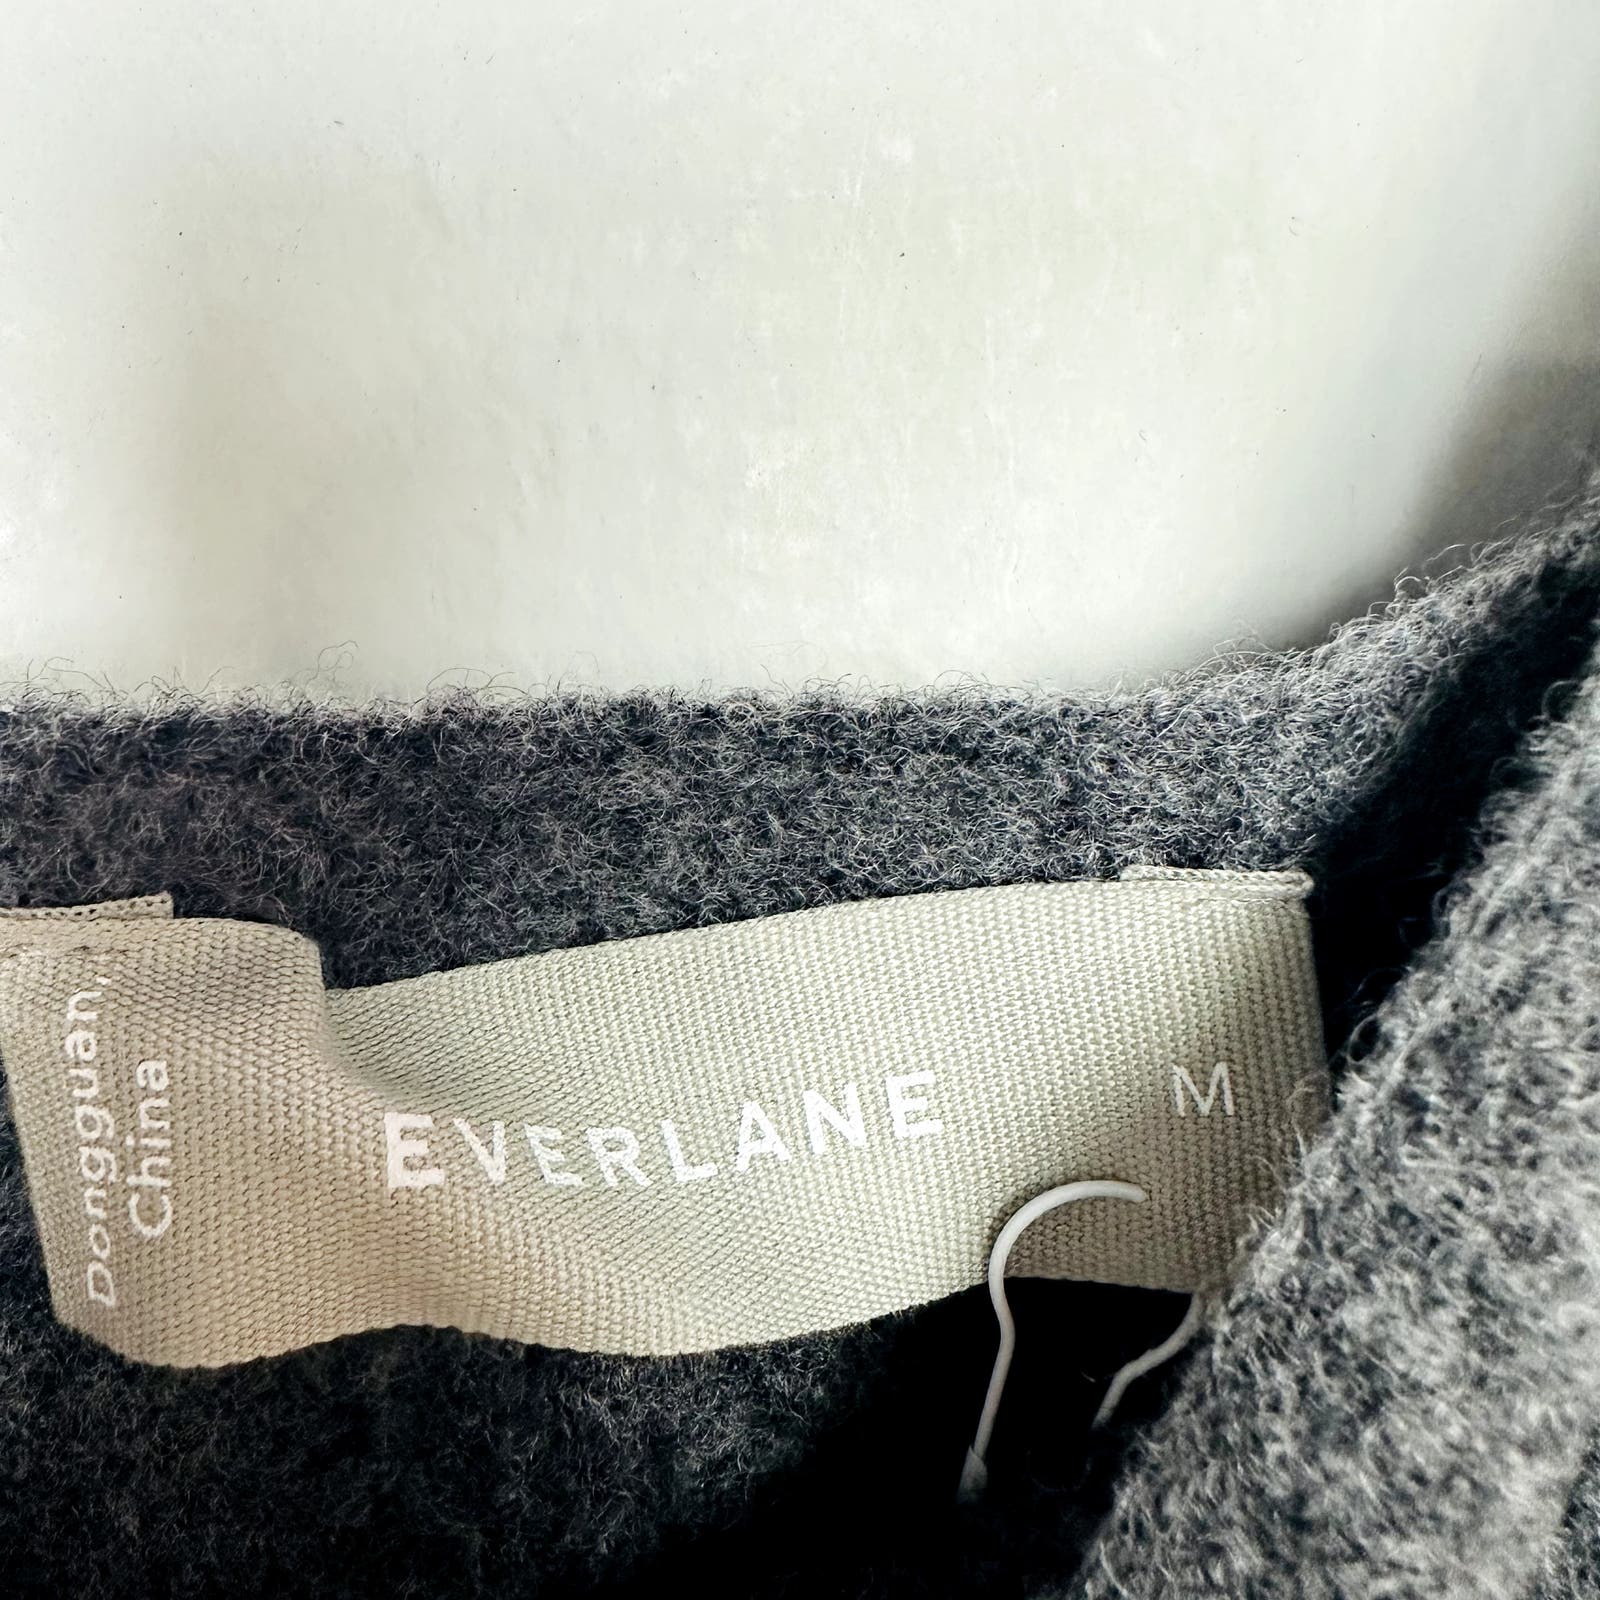 Everlane NWT The Cozy Stretch Tank Academia Wool Blend Crop Top Grey Size Medium